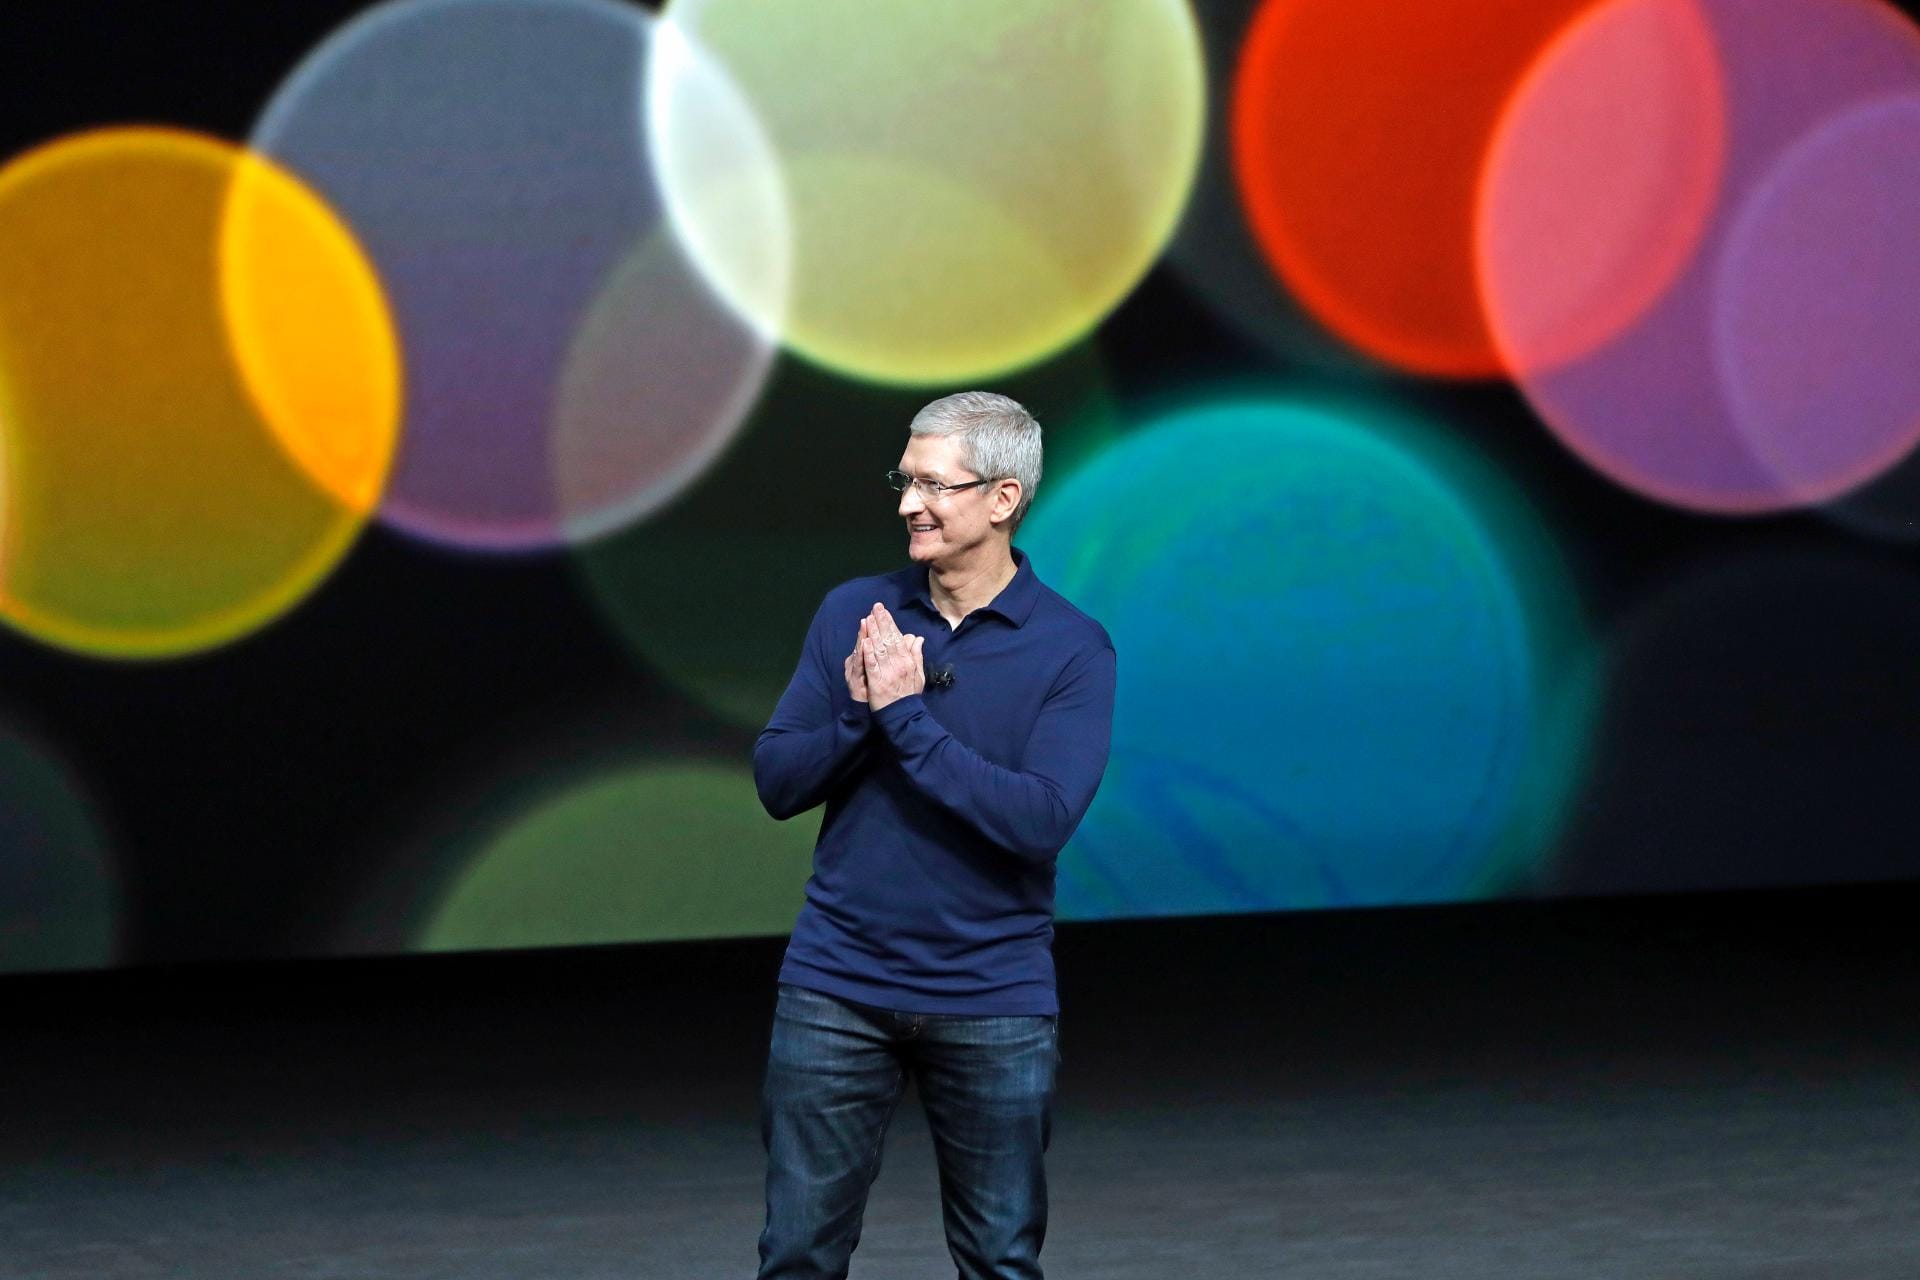 Tim Cook eröffnet das iPhone 7-Event